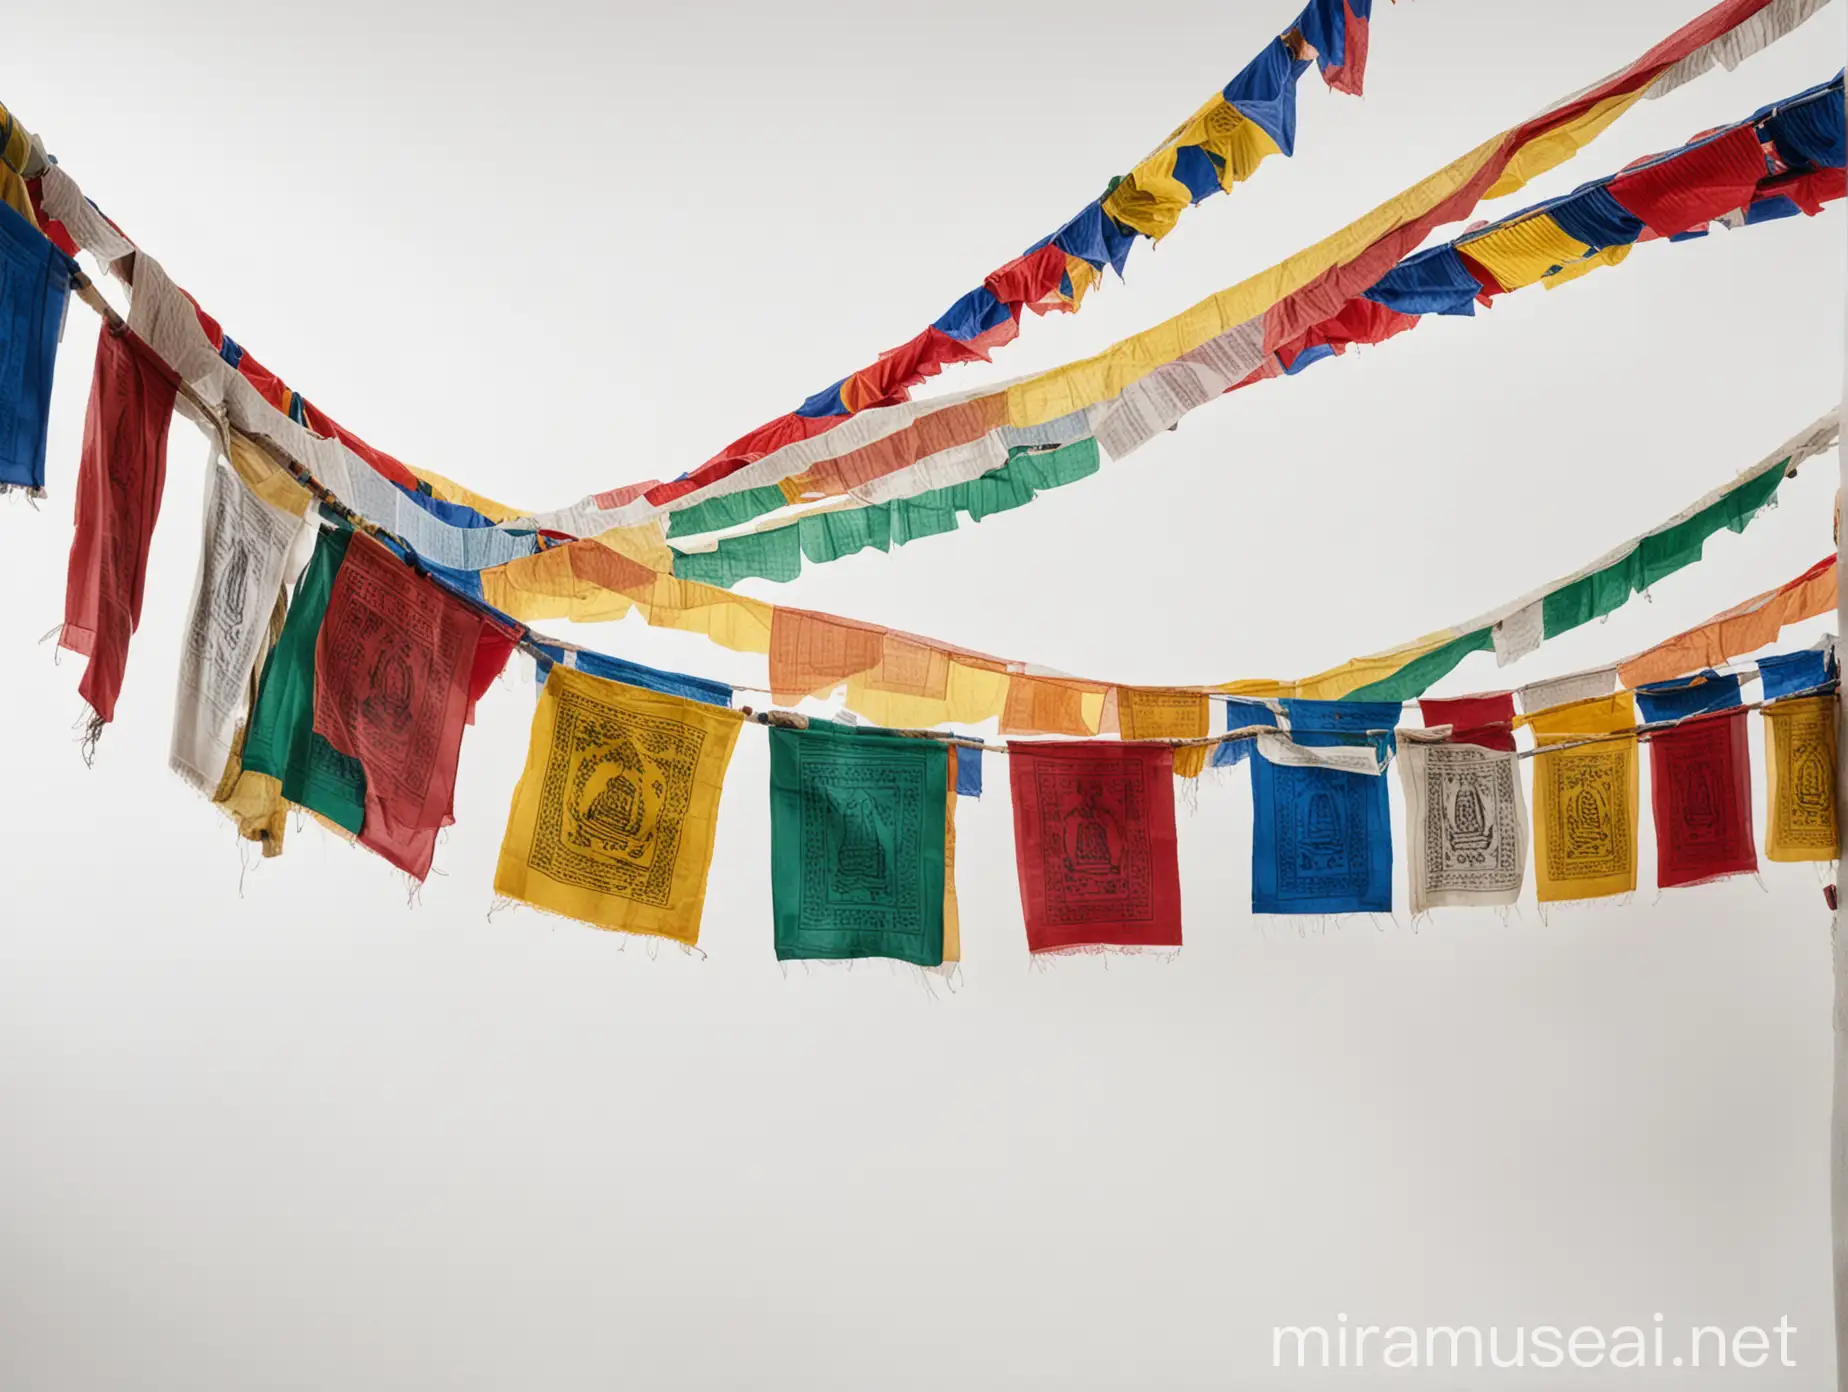 real photo of tibetan prayer flags on white background